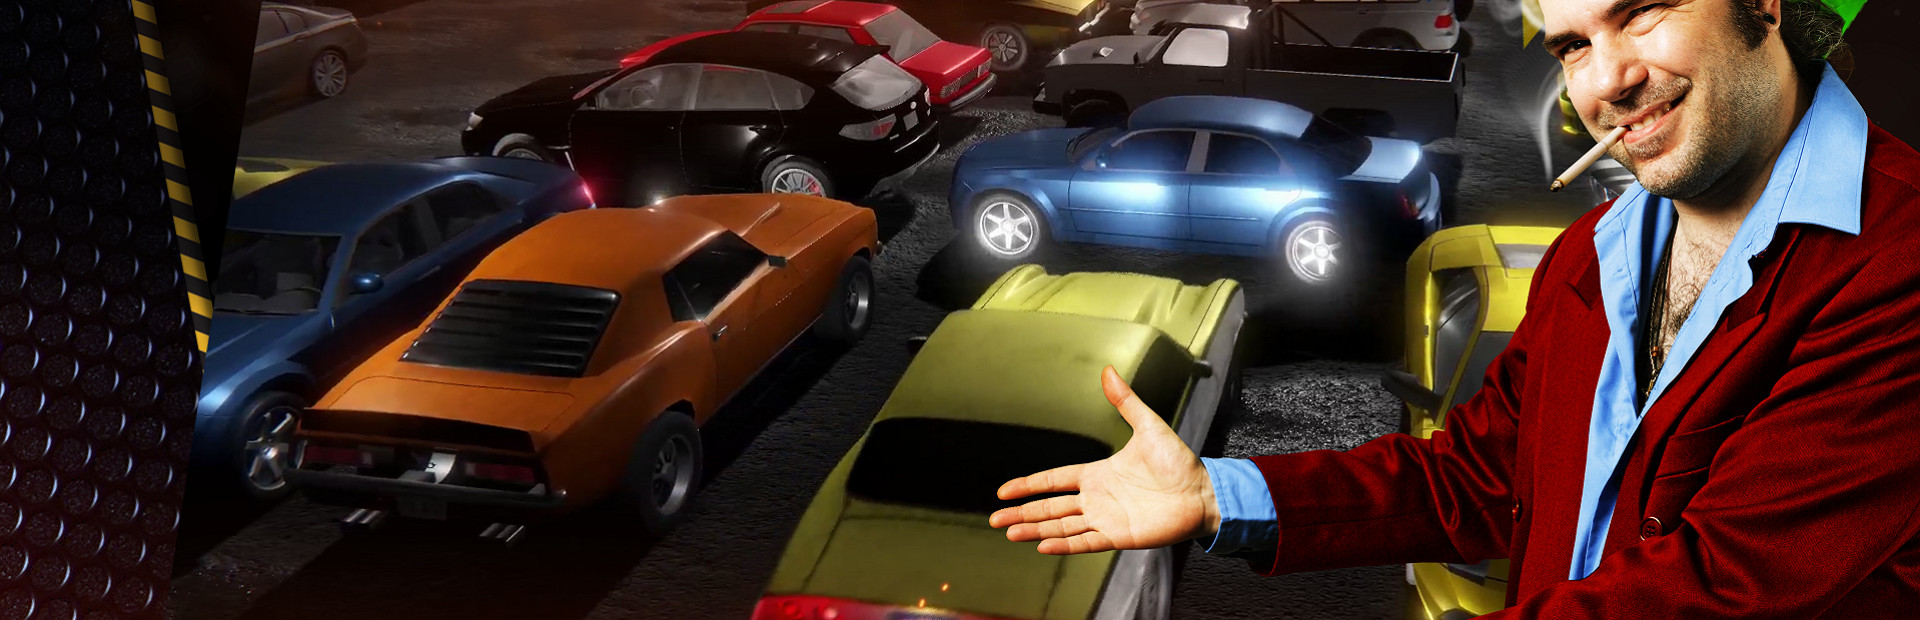 Car Trader Simulator cover image